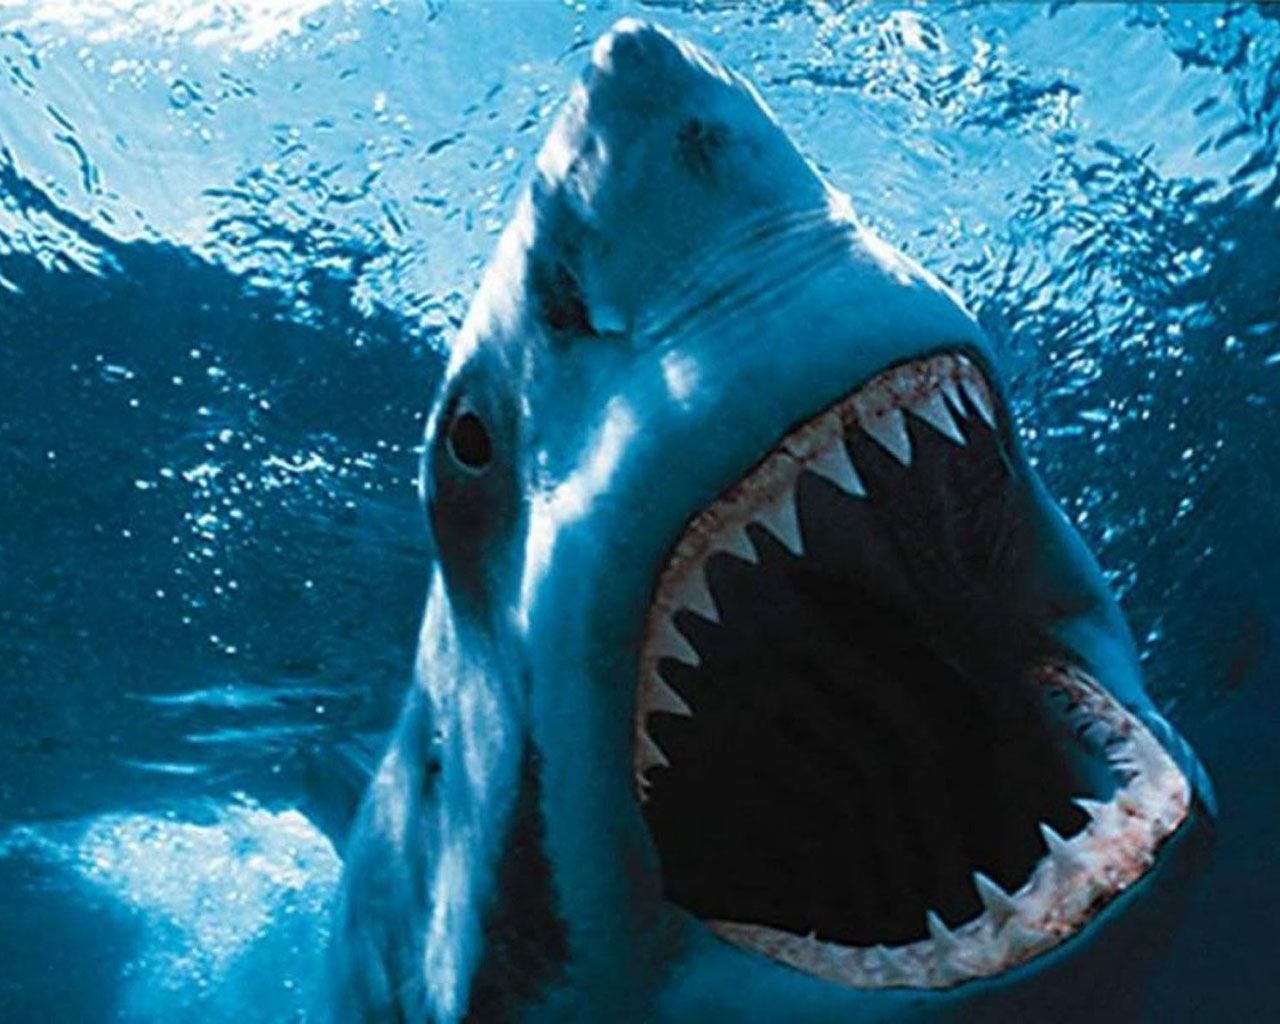 Shark Night 3D Movie 1280x1024 Wallpaper, 1280x1024 Wallpaper